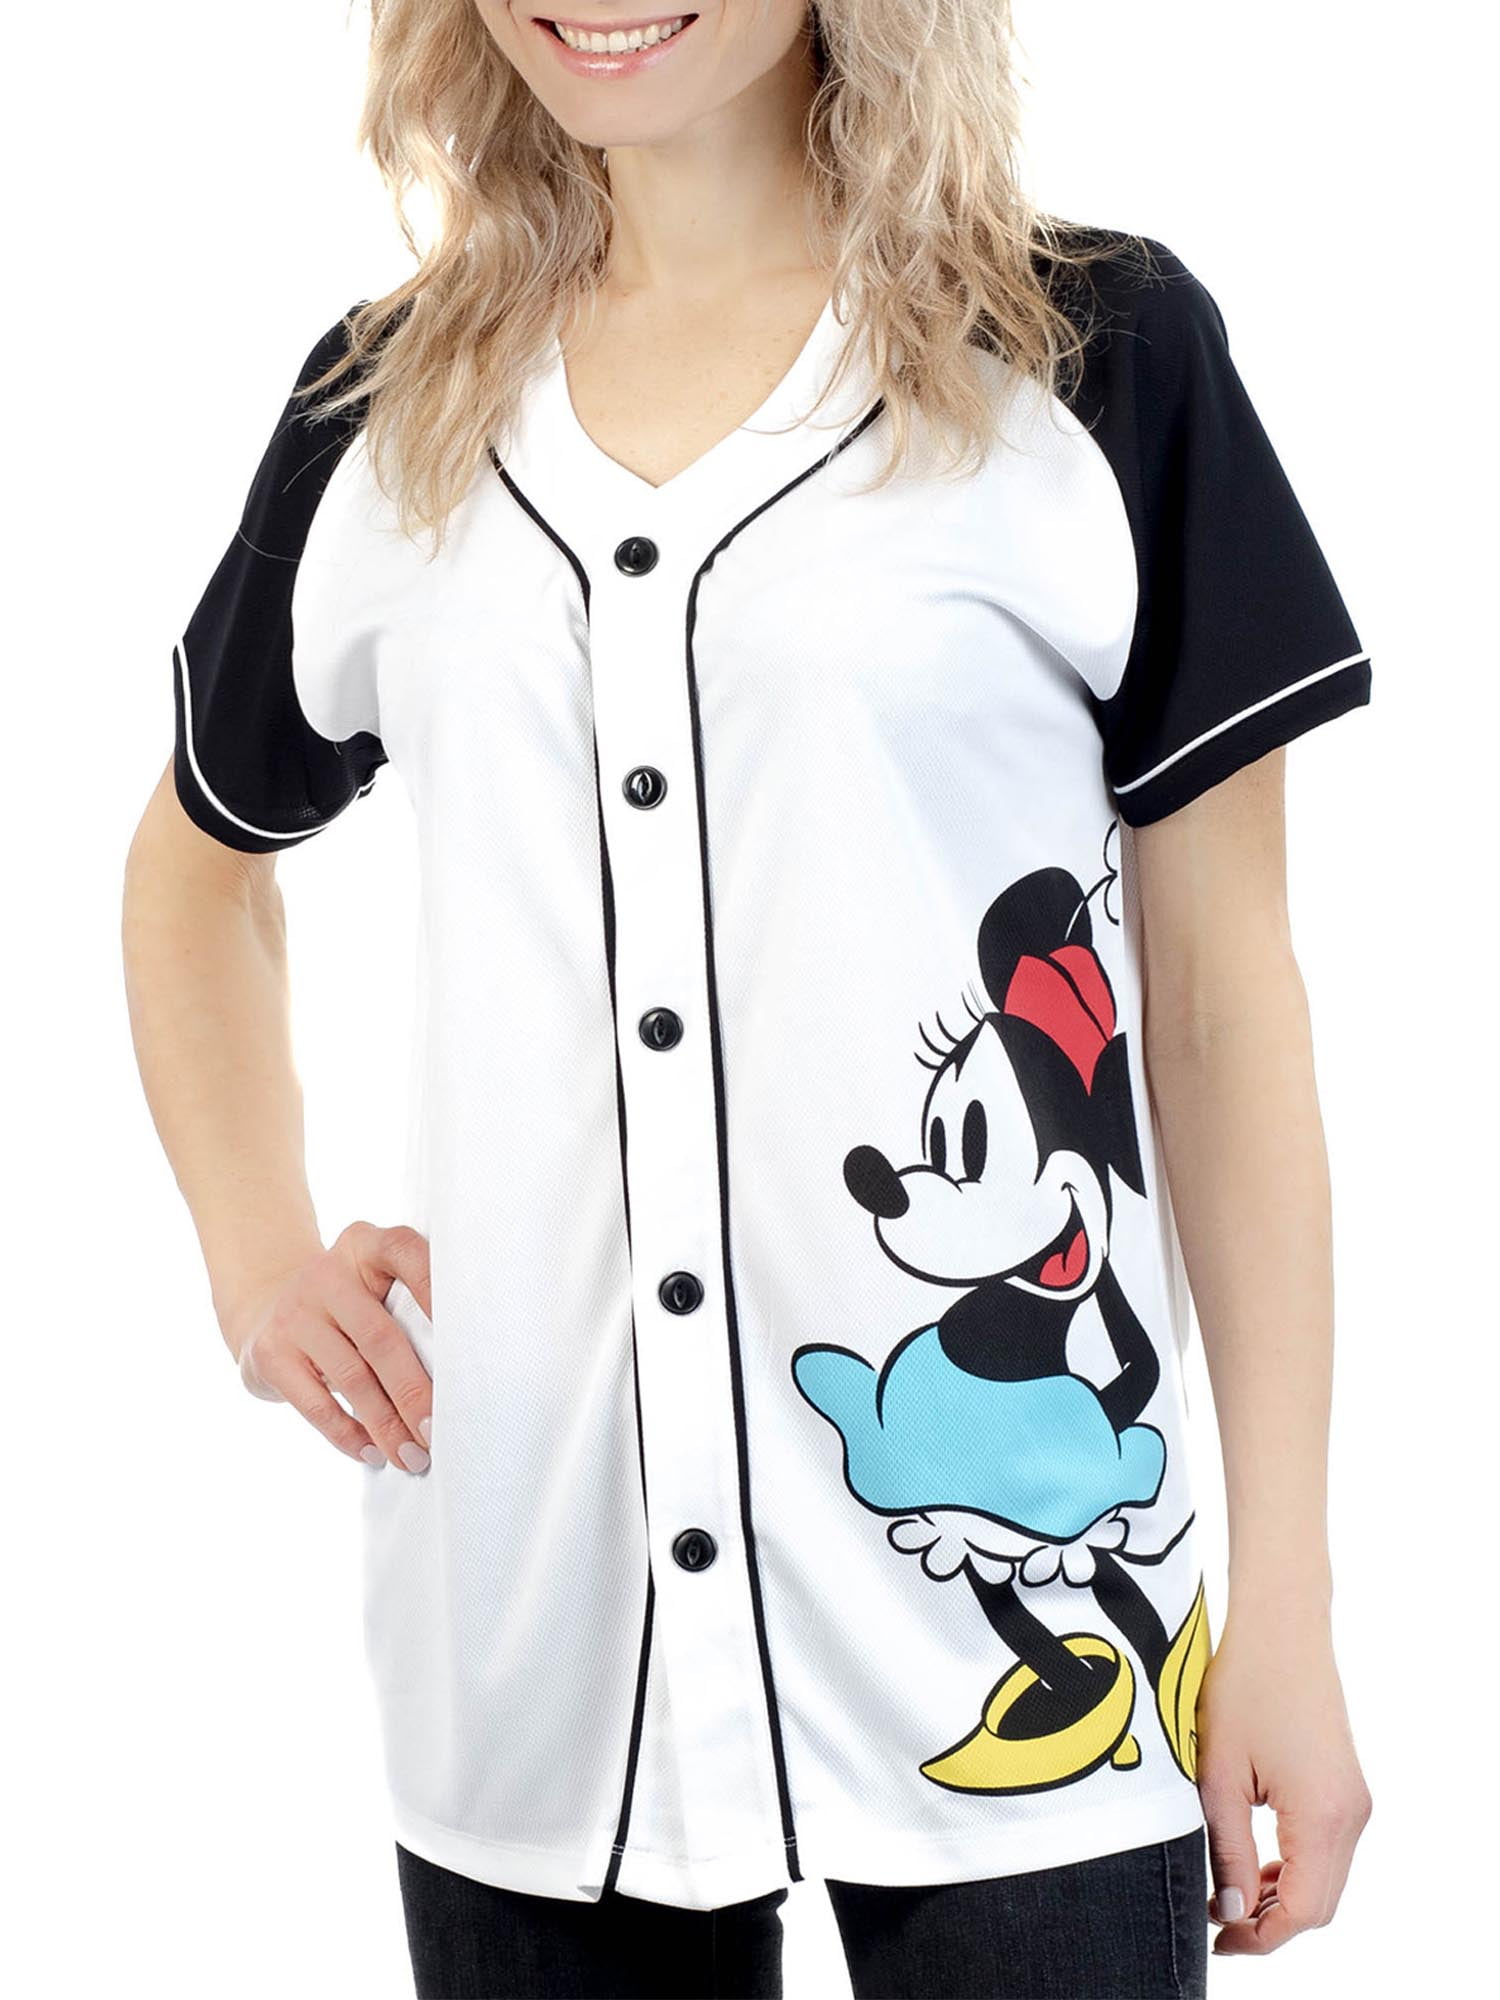 mens mickey mouse baseball jersey